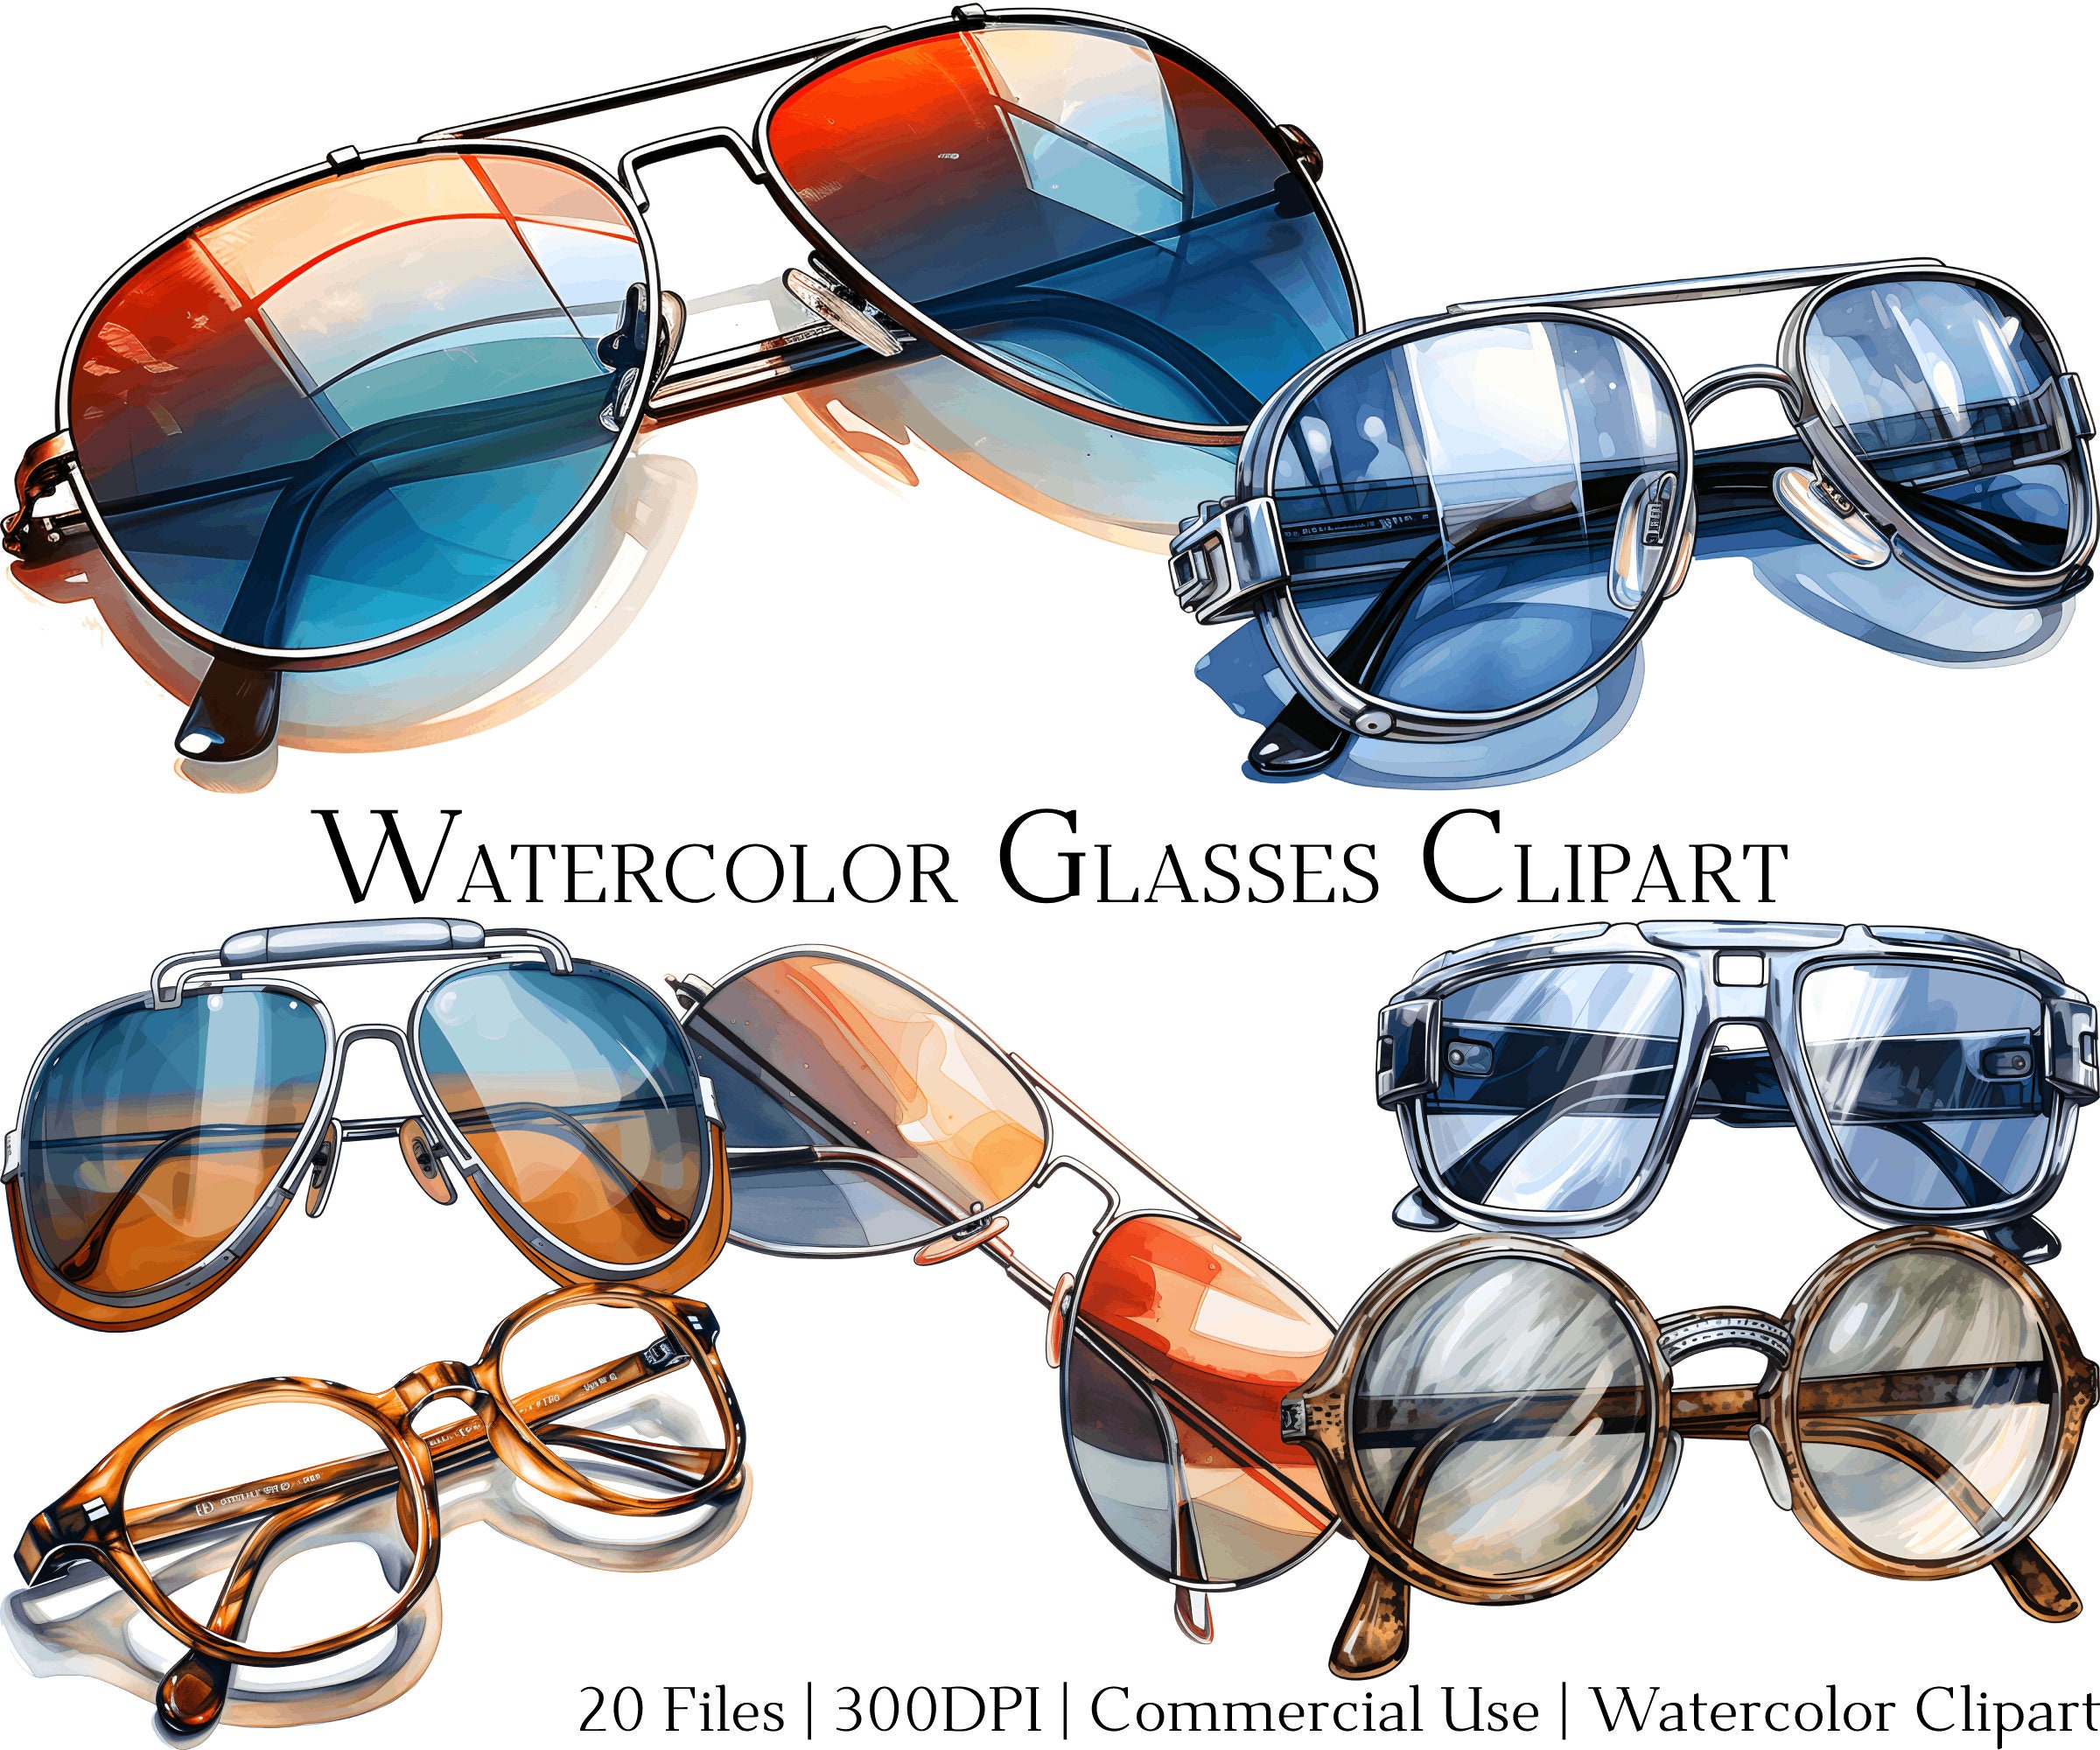 Magnifying Glass Svg Detective Glasses Svg Clipart Image, Cricut Svg Image,  Dxf, Pdf, Eps, Jpg, Png, Svg, Silhouette, Cameo, Design 